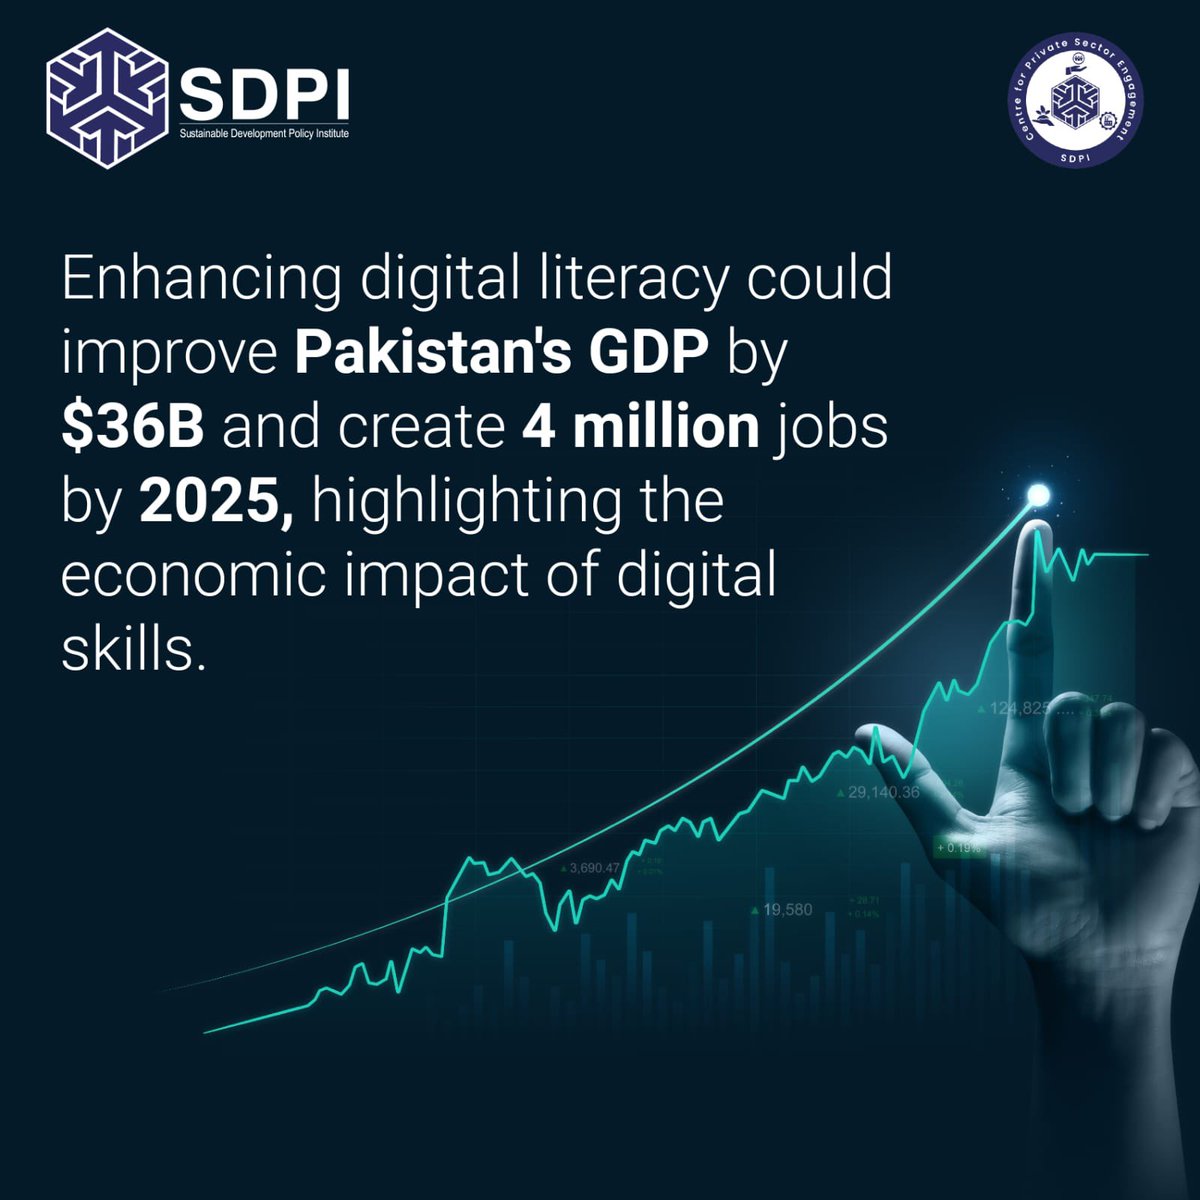 Enhancing digital literacy in Pakistan could increase GDP by $36B and create 4 million jobs by 2025. 

 #TechForYouthEmployment #DigitalEconomyPK #TechGrowth #TechTalkPK #LeadersInTech #InnovationPK #Digitalatransformation